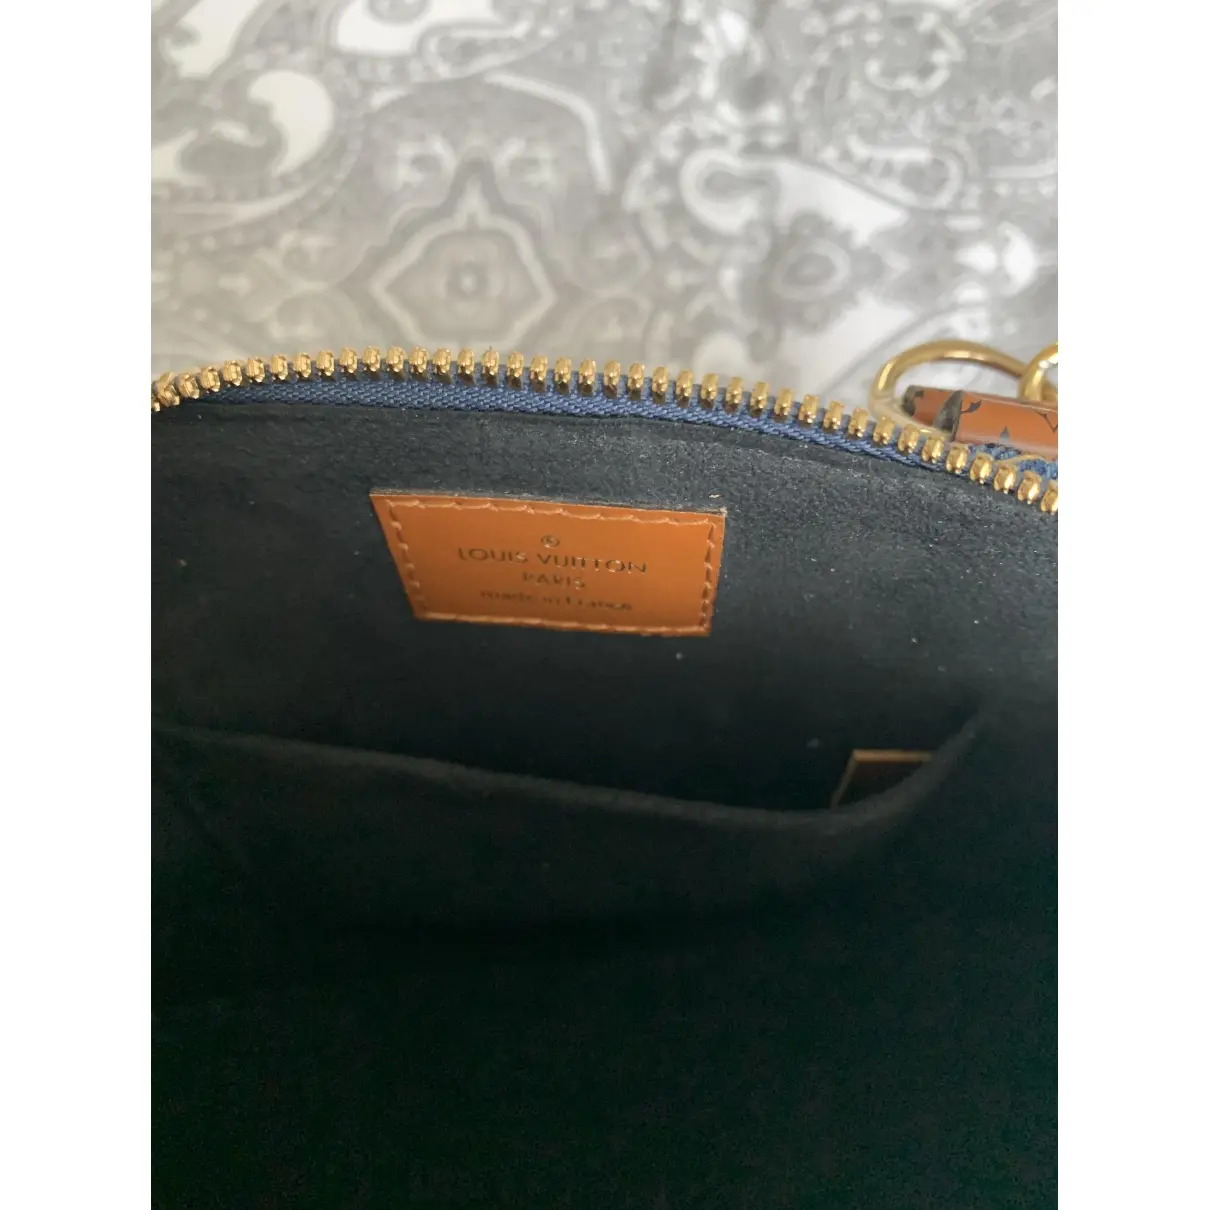 Buy Louis Vuitton Alma BB handbag online